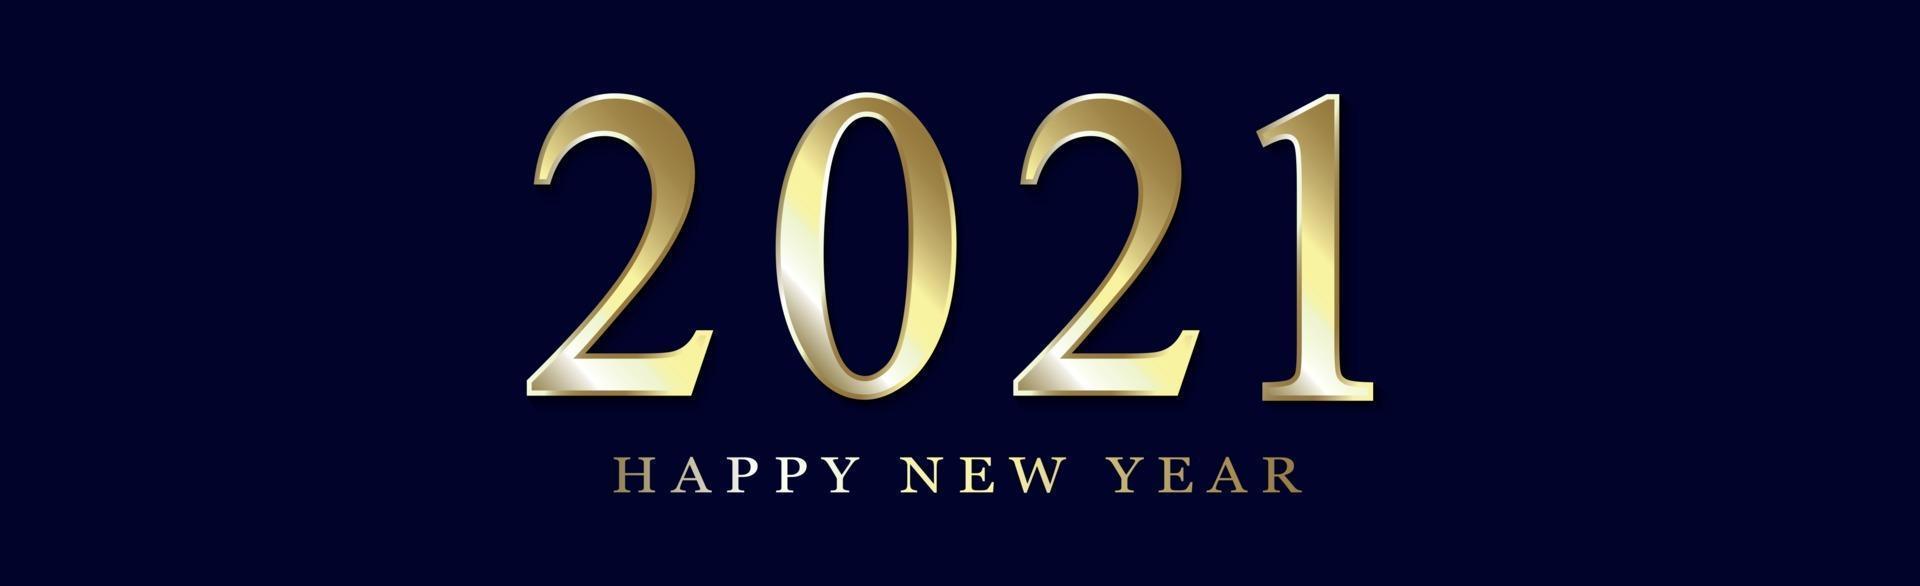 goldene Zahlen 2021 Neujahrswünsche - Illustration vektor